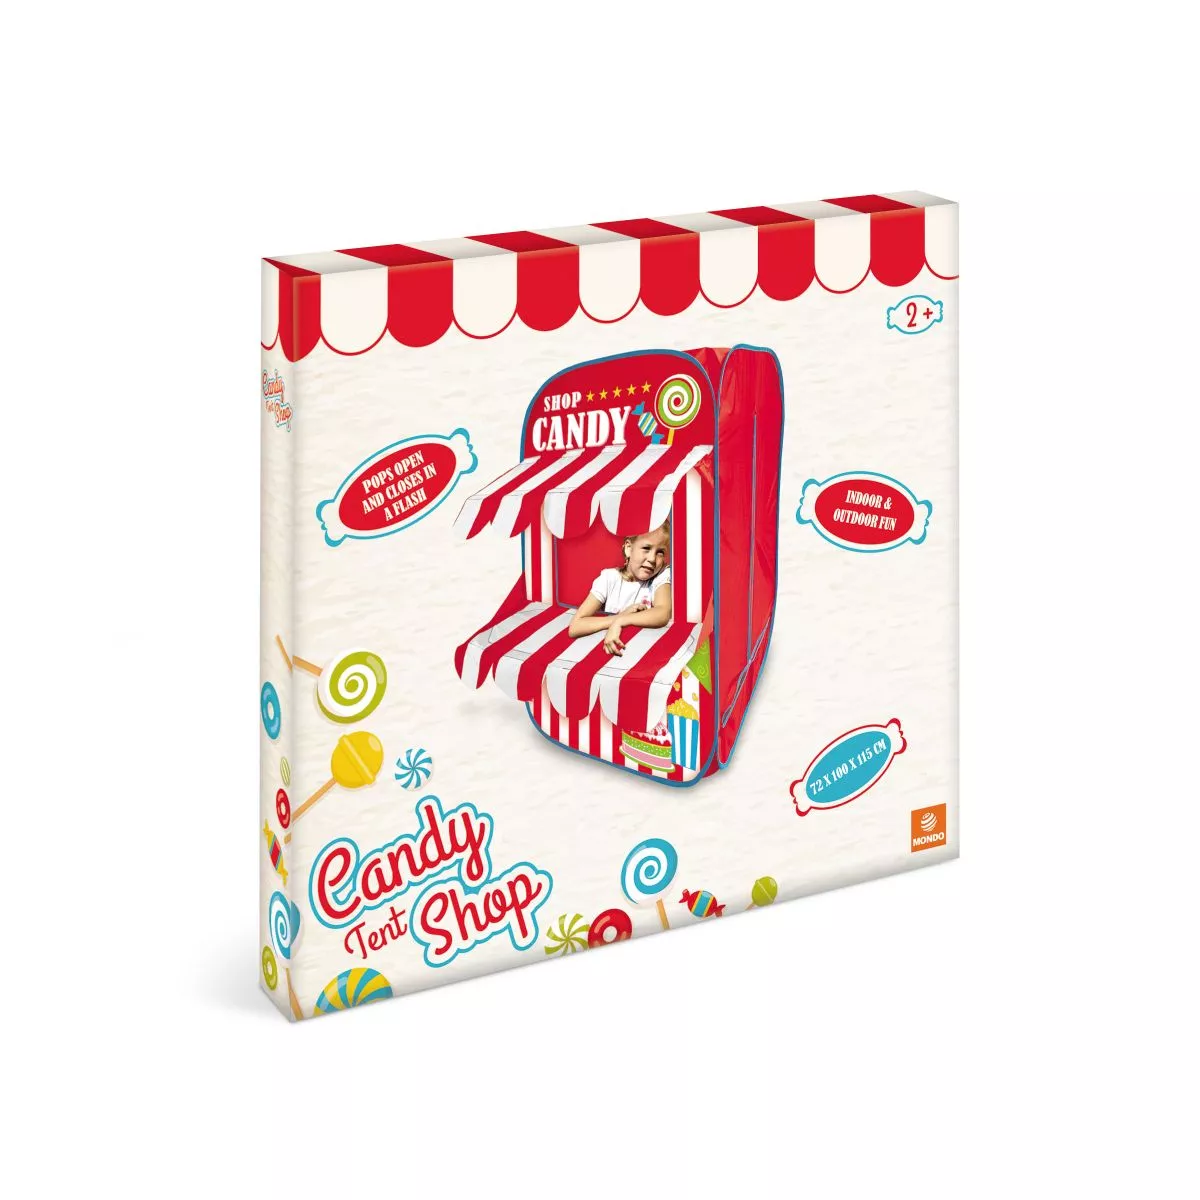 Cort magazin de dulciuri CANDY SHOP TENT 2